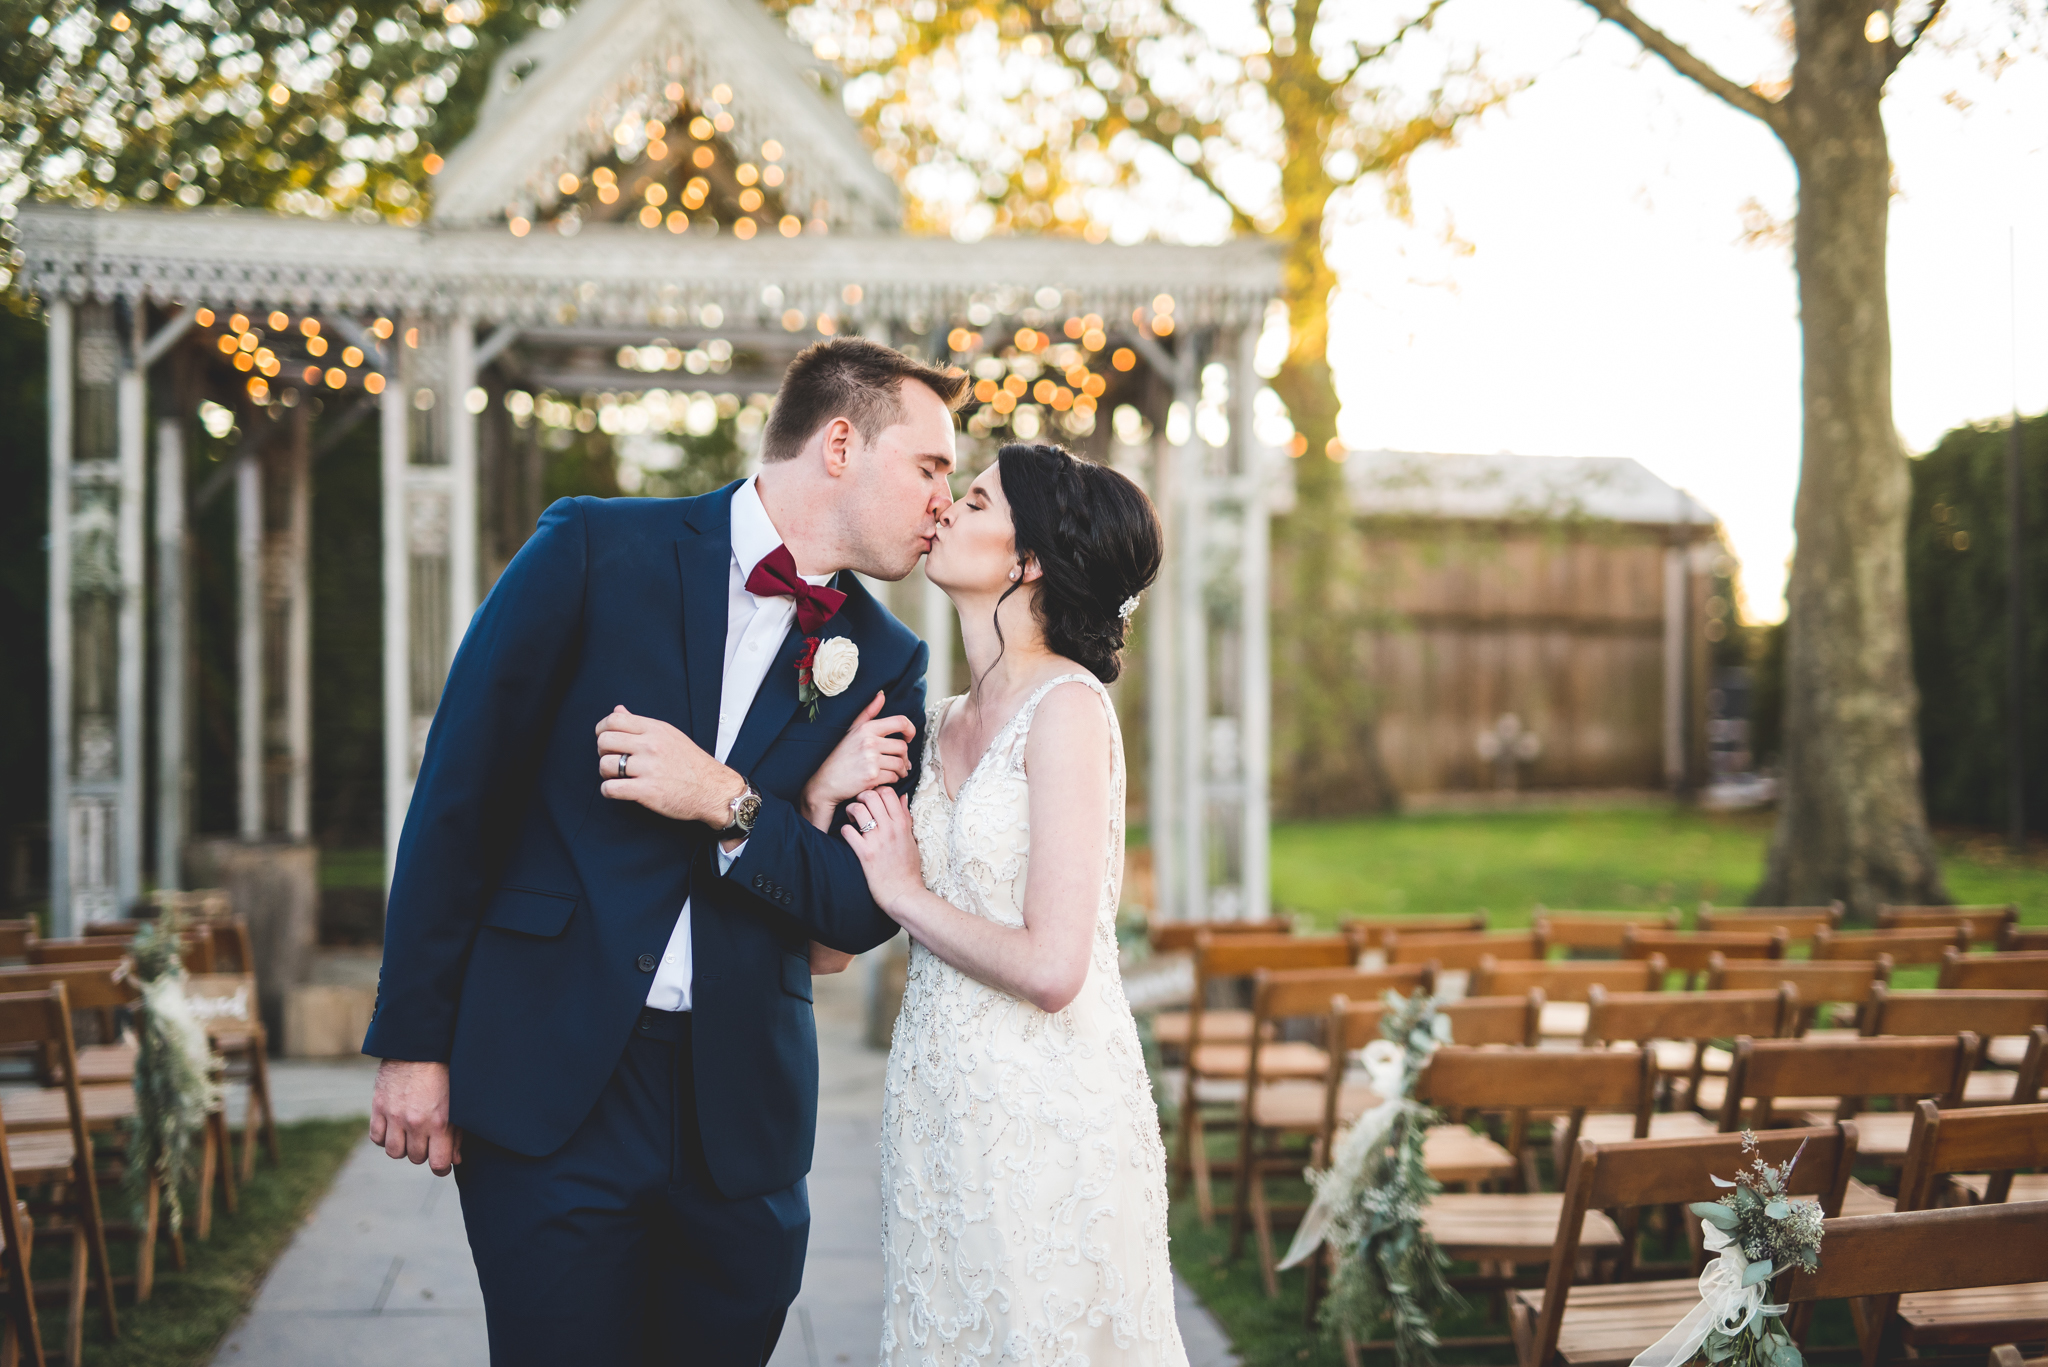 Brett and Joelle Married – Terrain at Styers